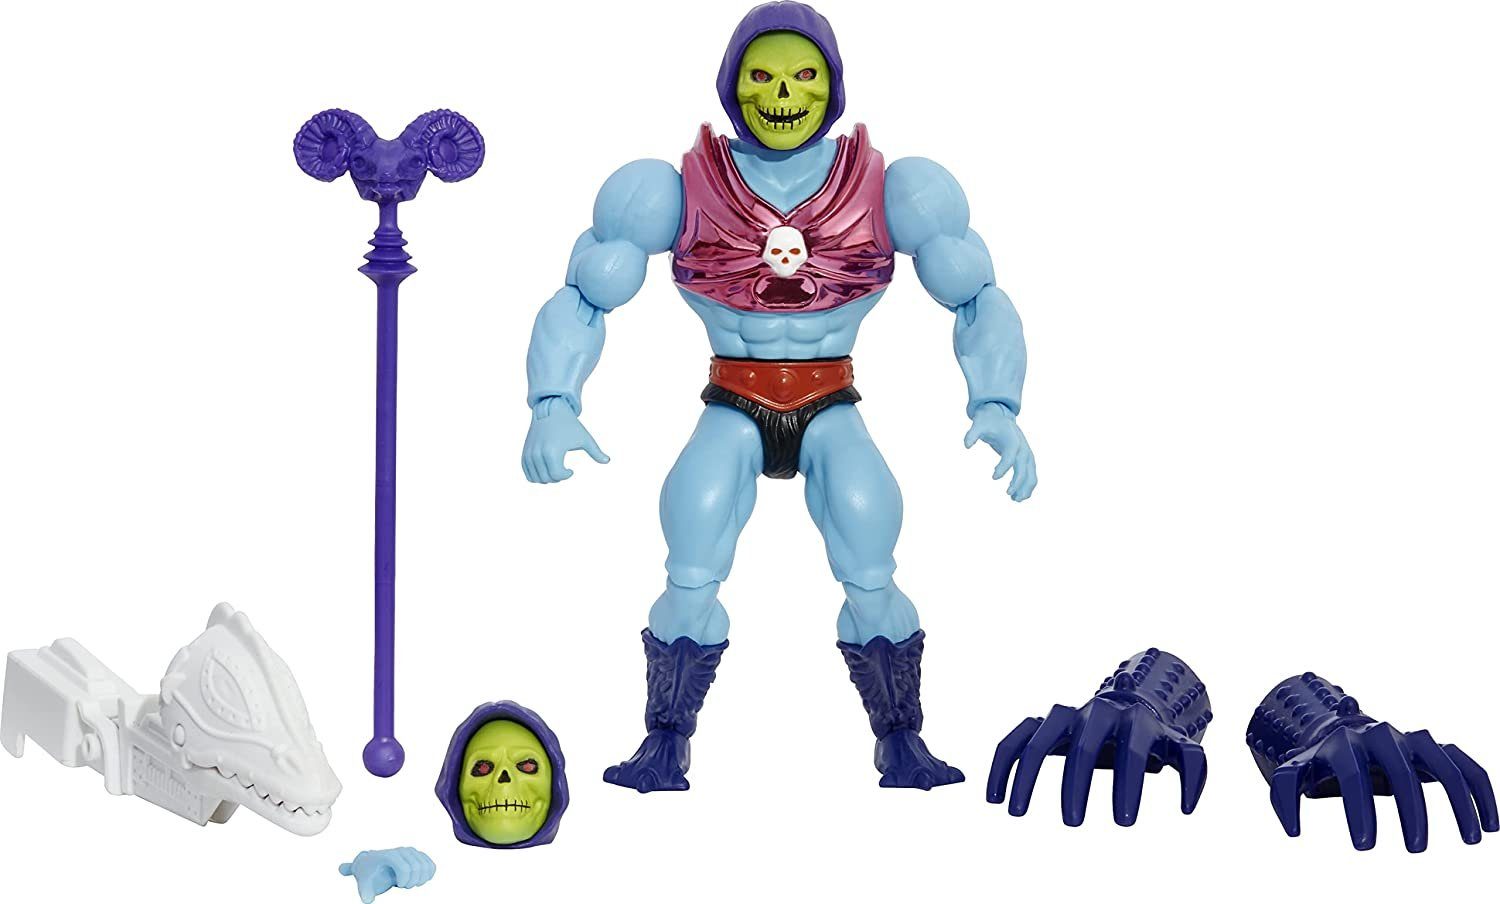 Mattel® Actionfigur Masters of the - Terror 14 Claws - cm Universe Spielset Deluxe - Skeletor